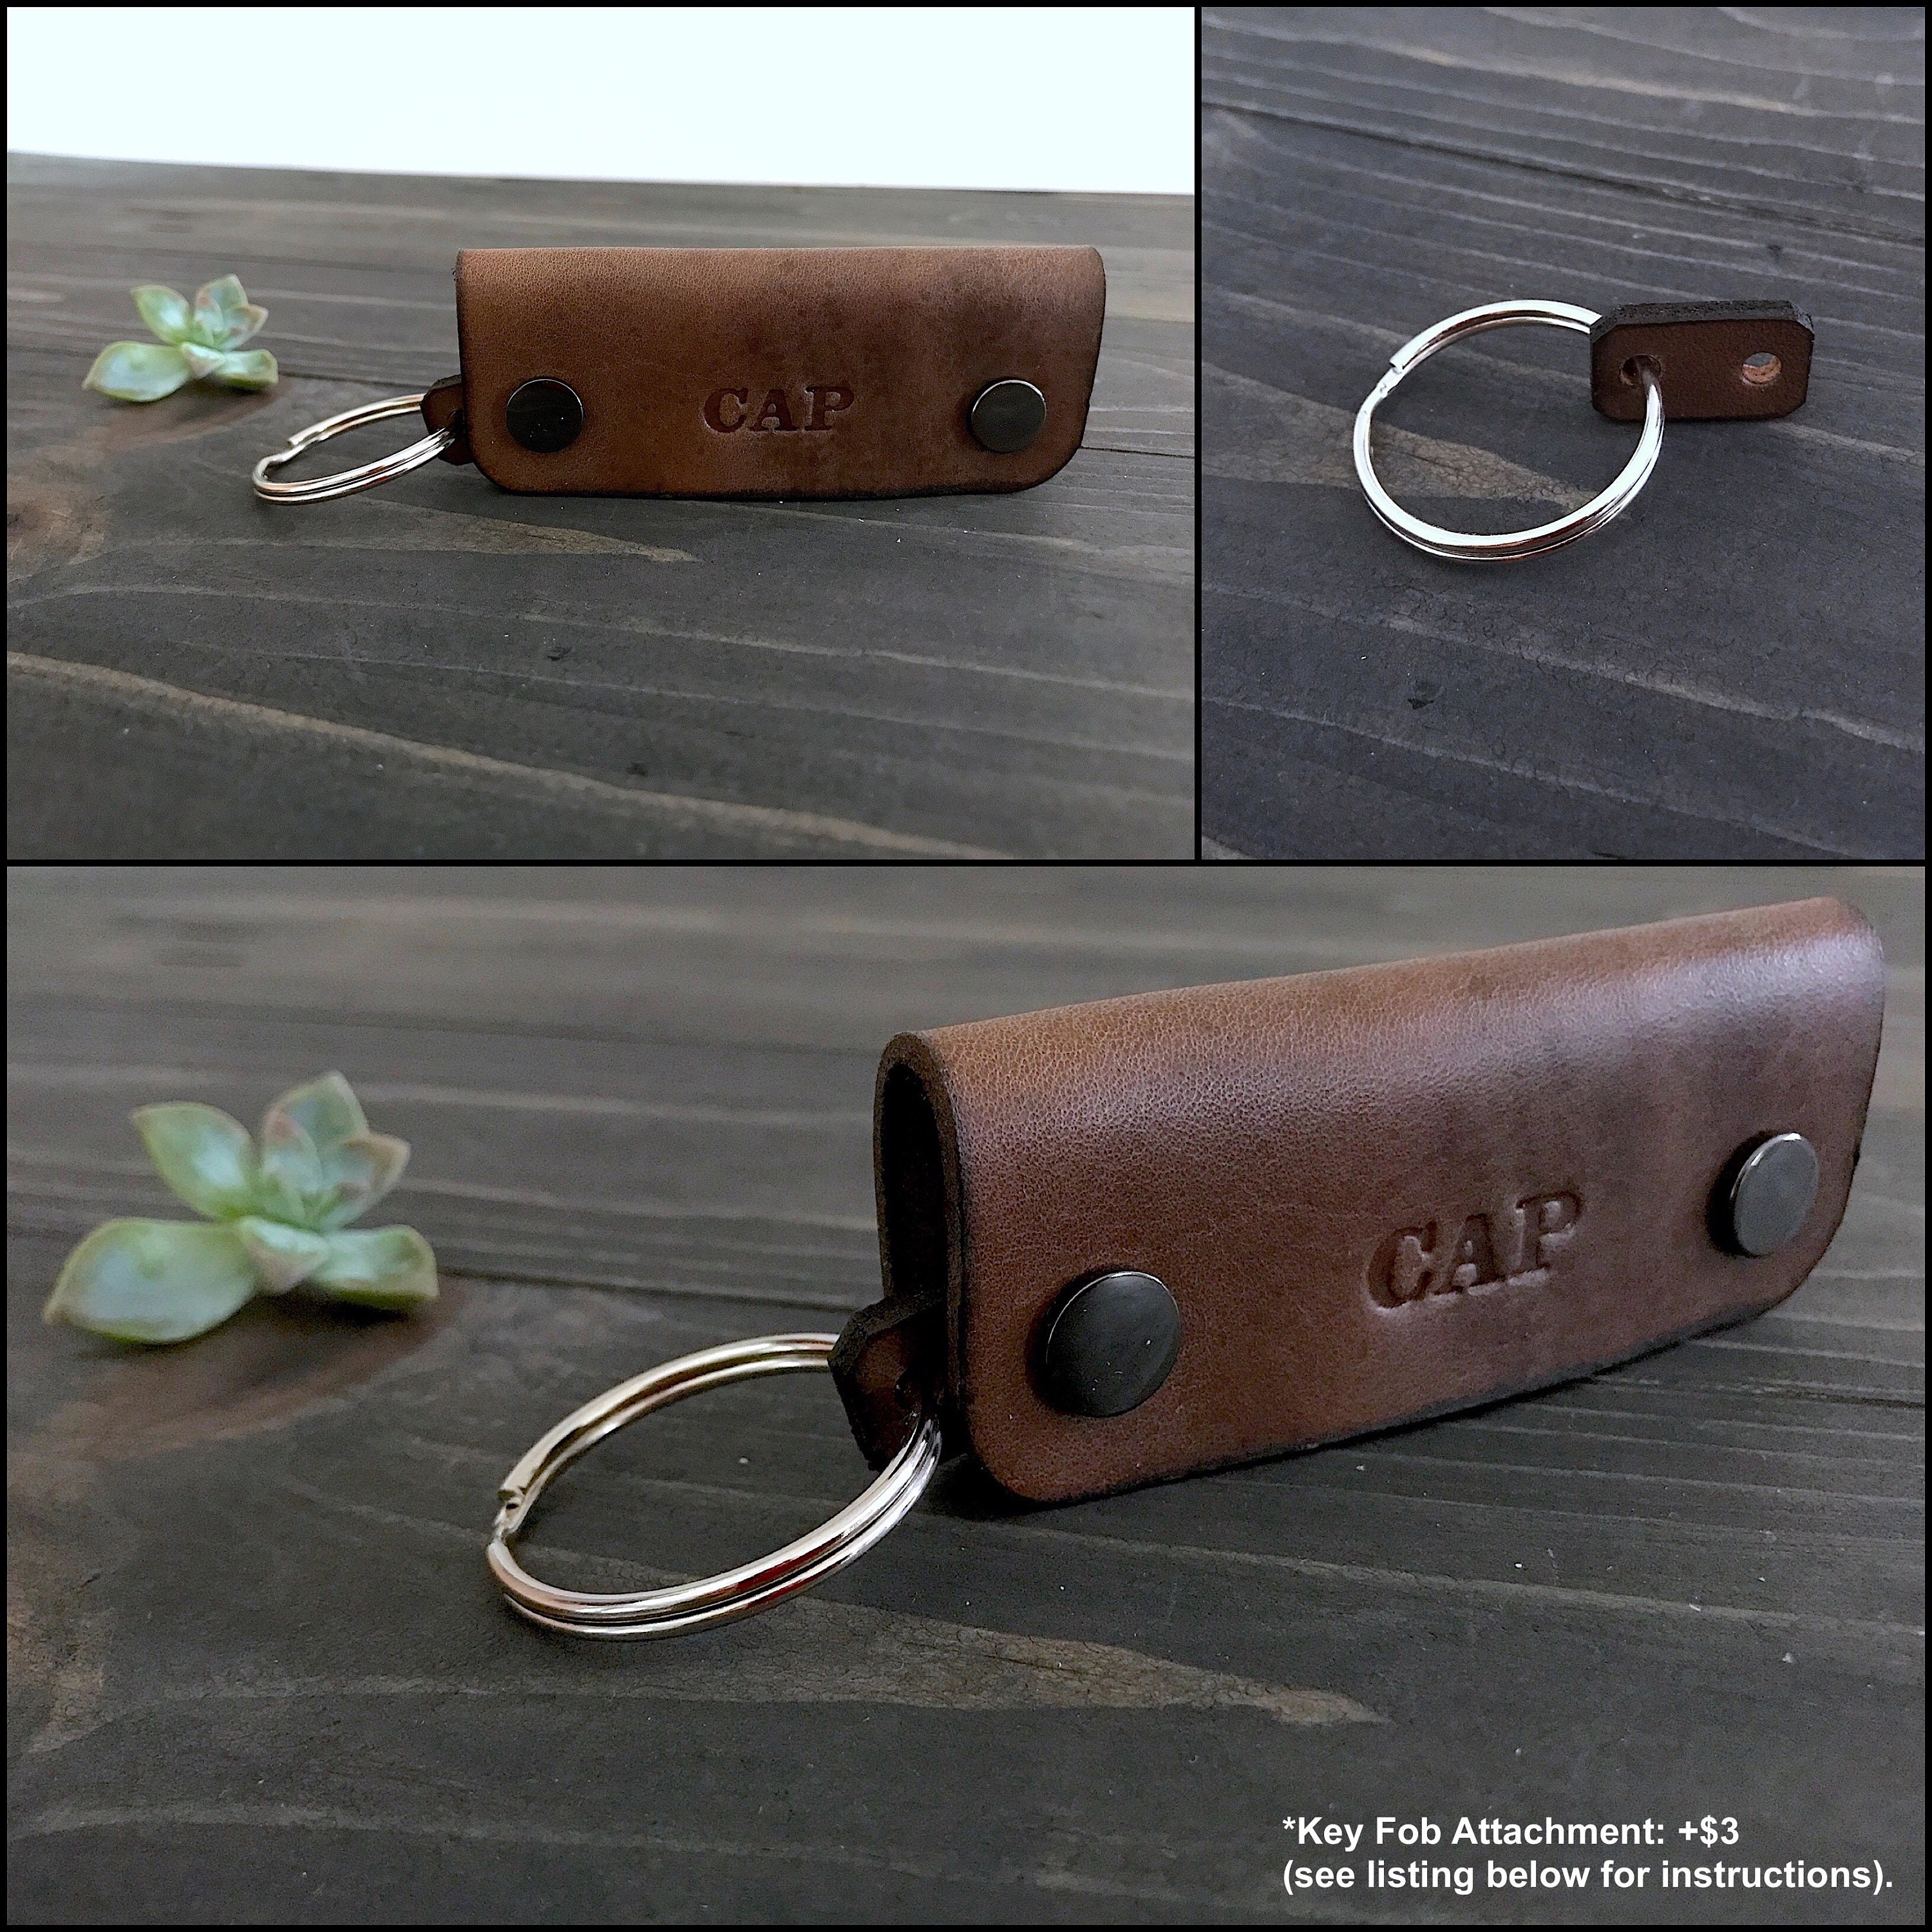 Leather Key Holder Orangizer - RECNEPS DESIGN